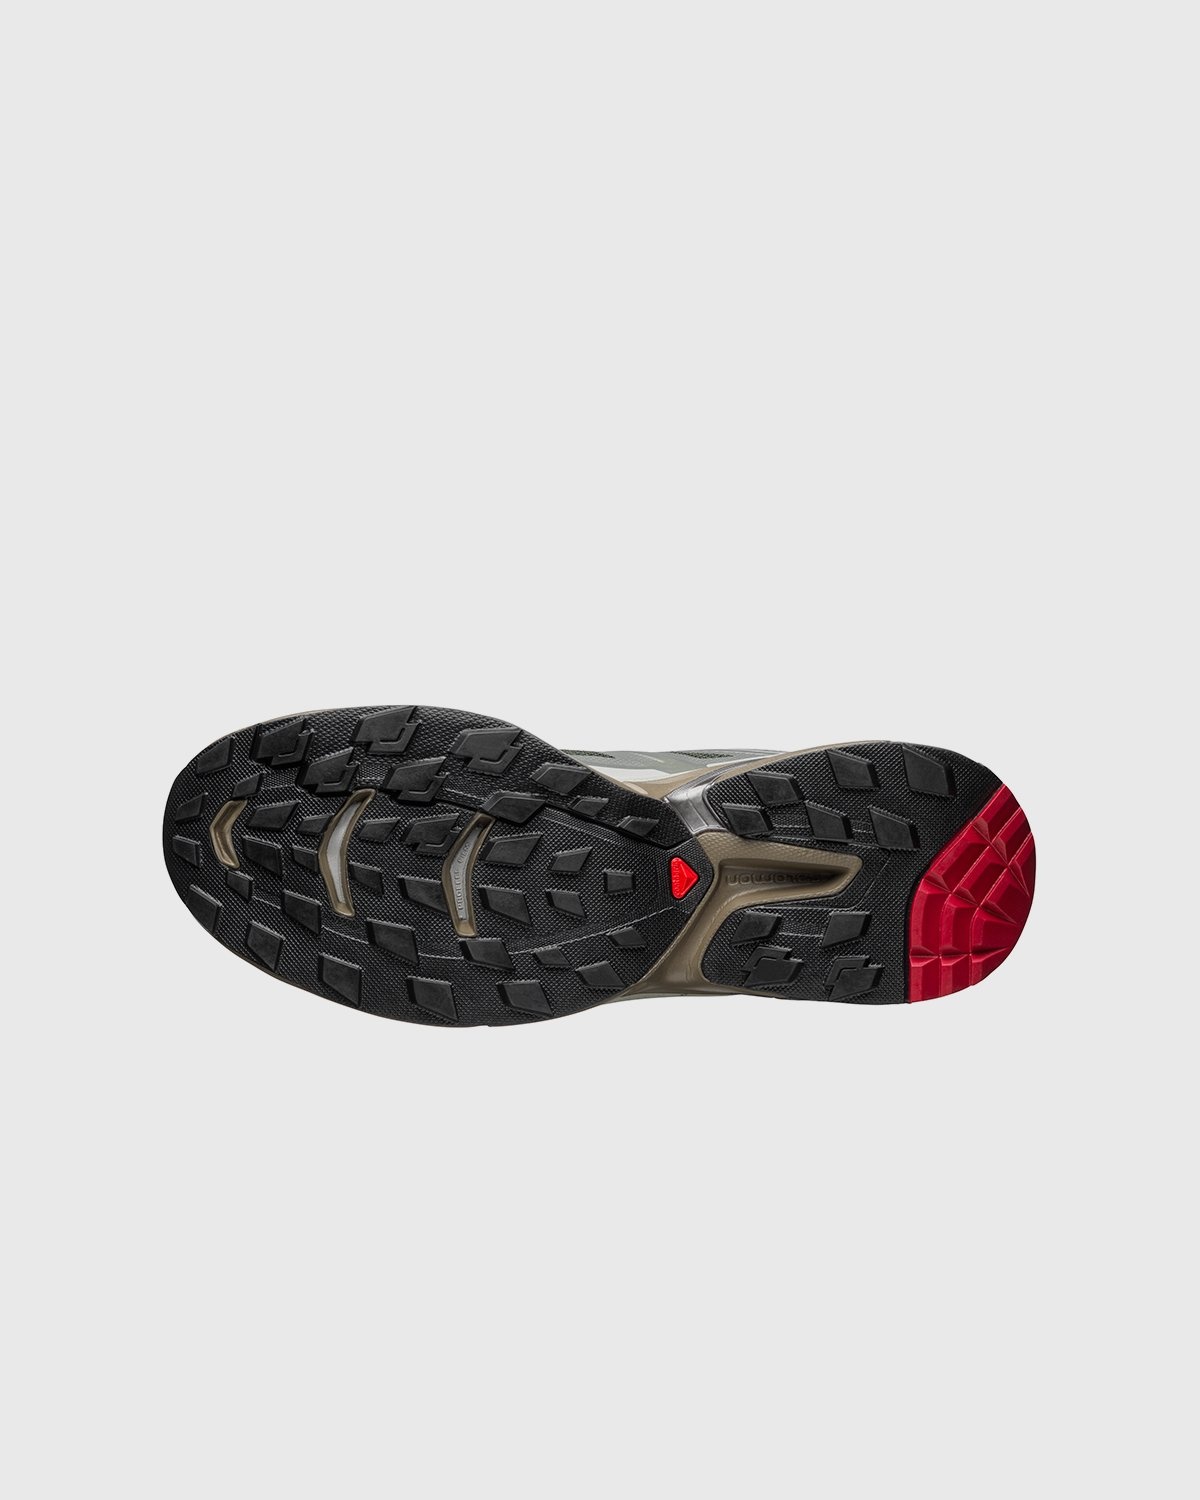 Salomon – XT-Wings 2 Advanced Peat - Low Top Sneakers - Black - Image 5